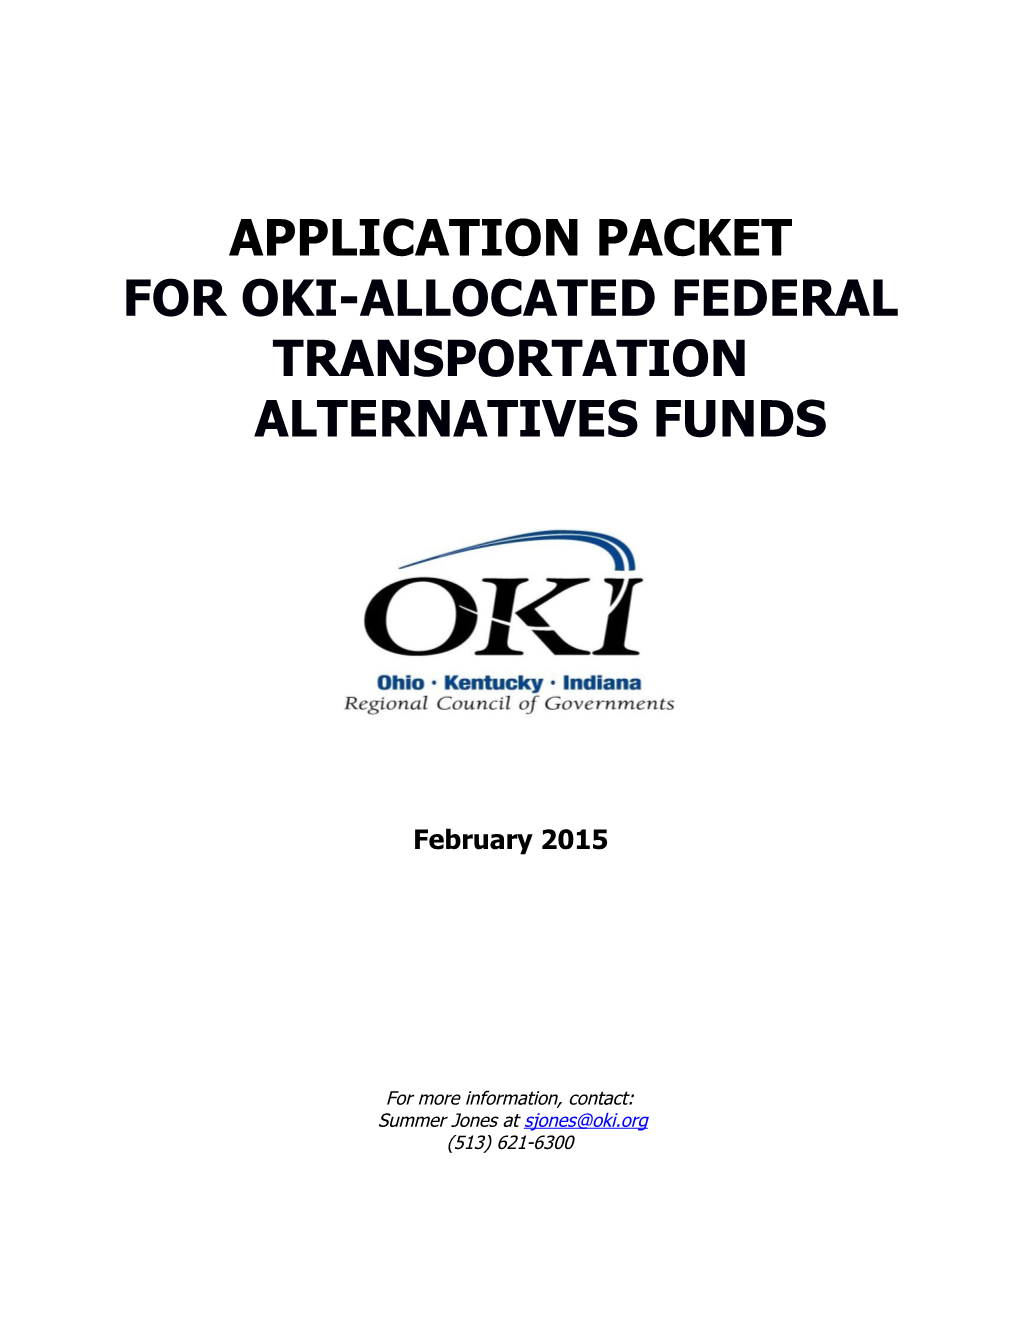 OKI Transportation Alternatives Project Ranking